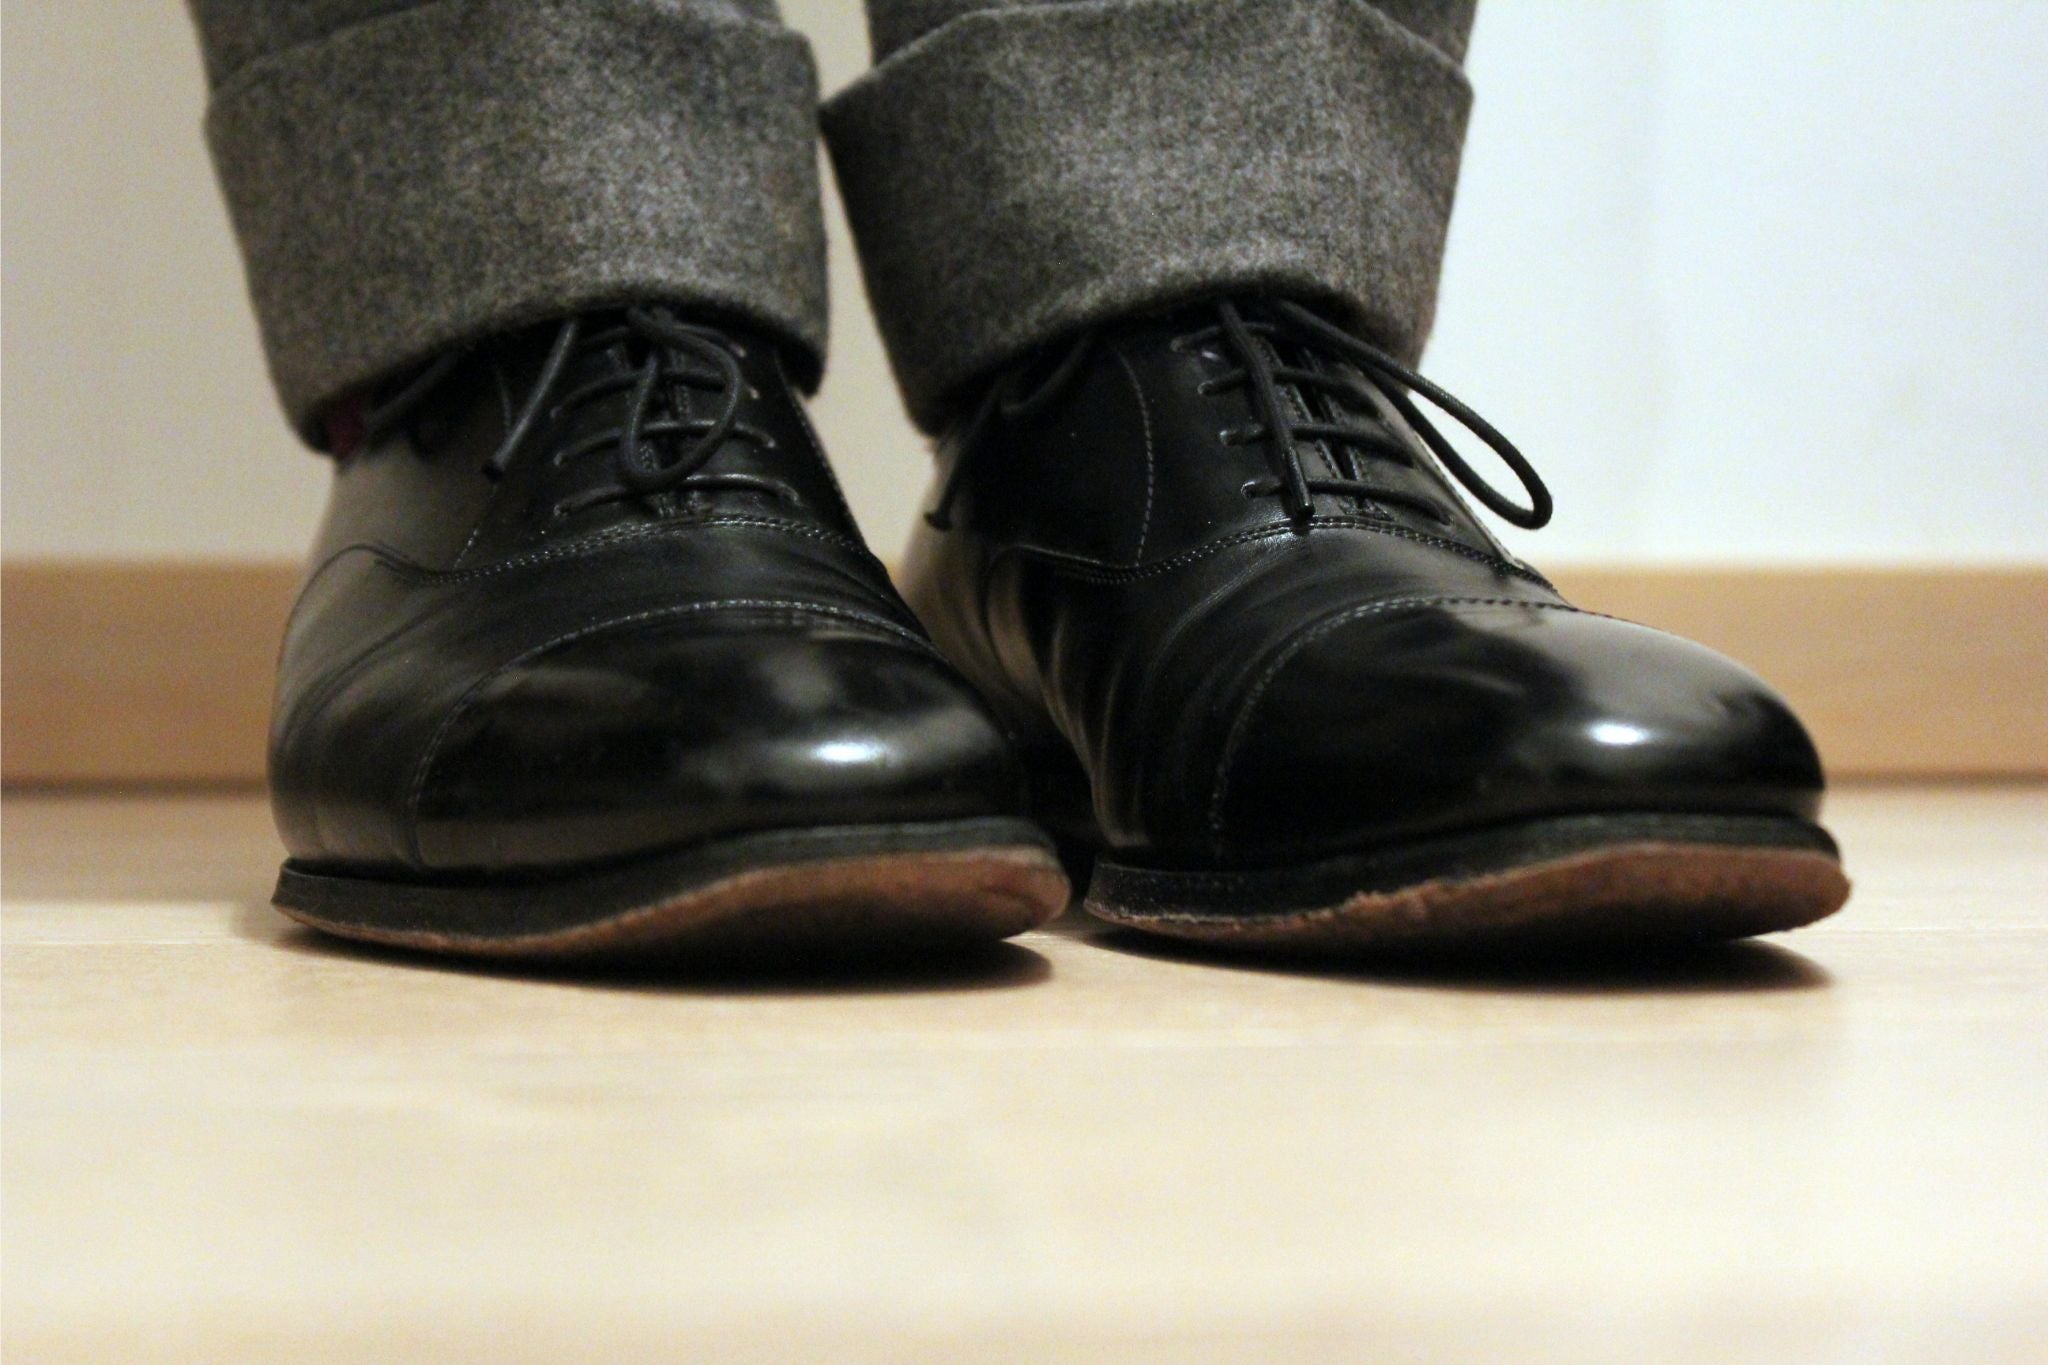 Black oxford shoes - Alfred Sargent